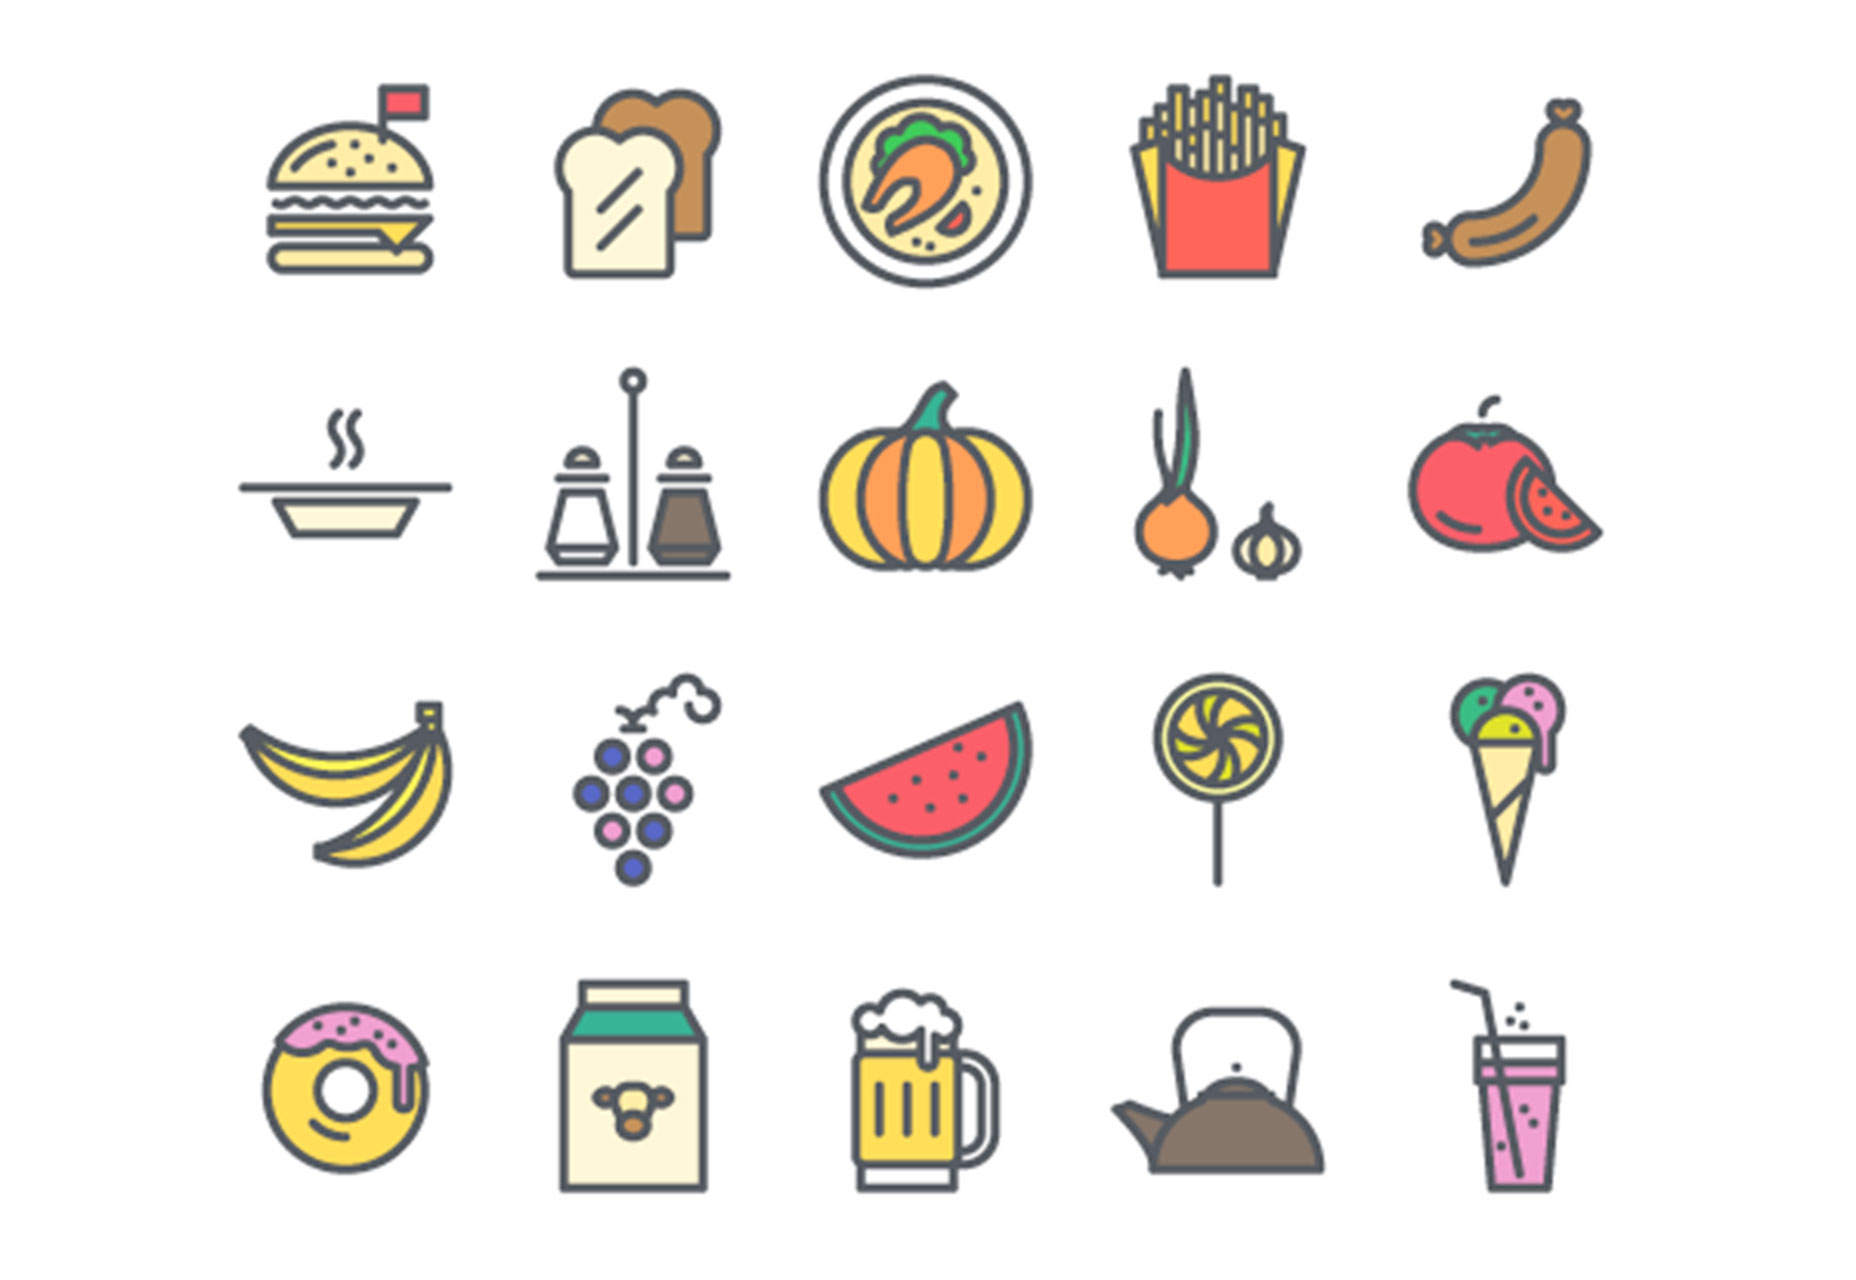 food-icons